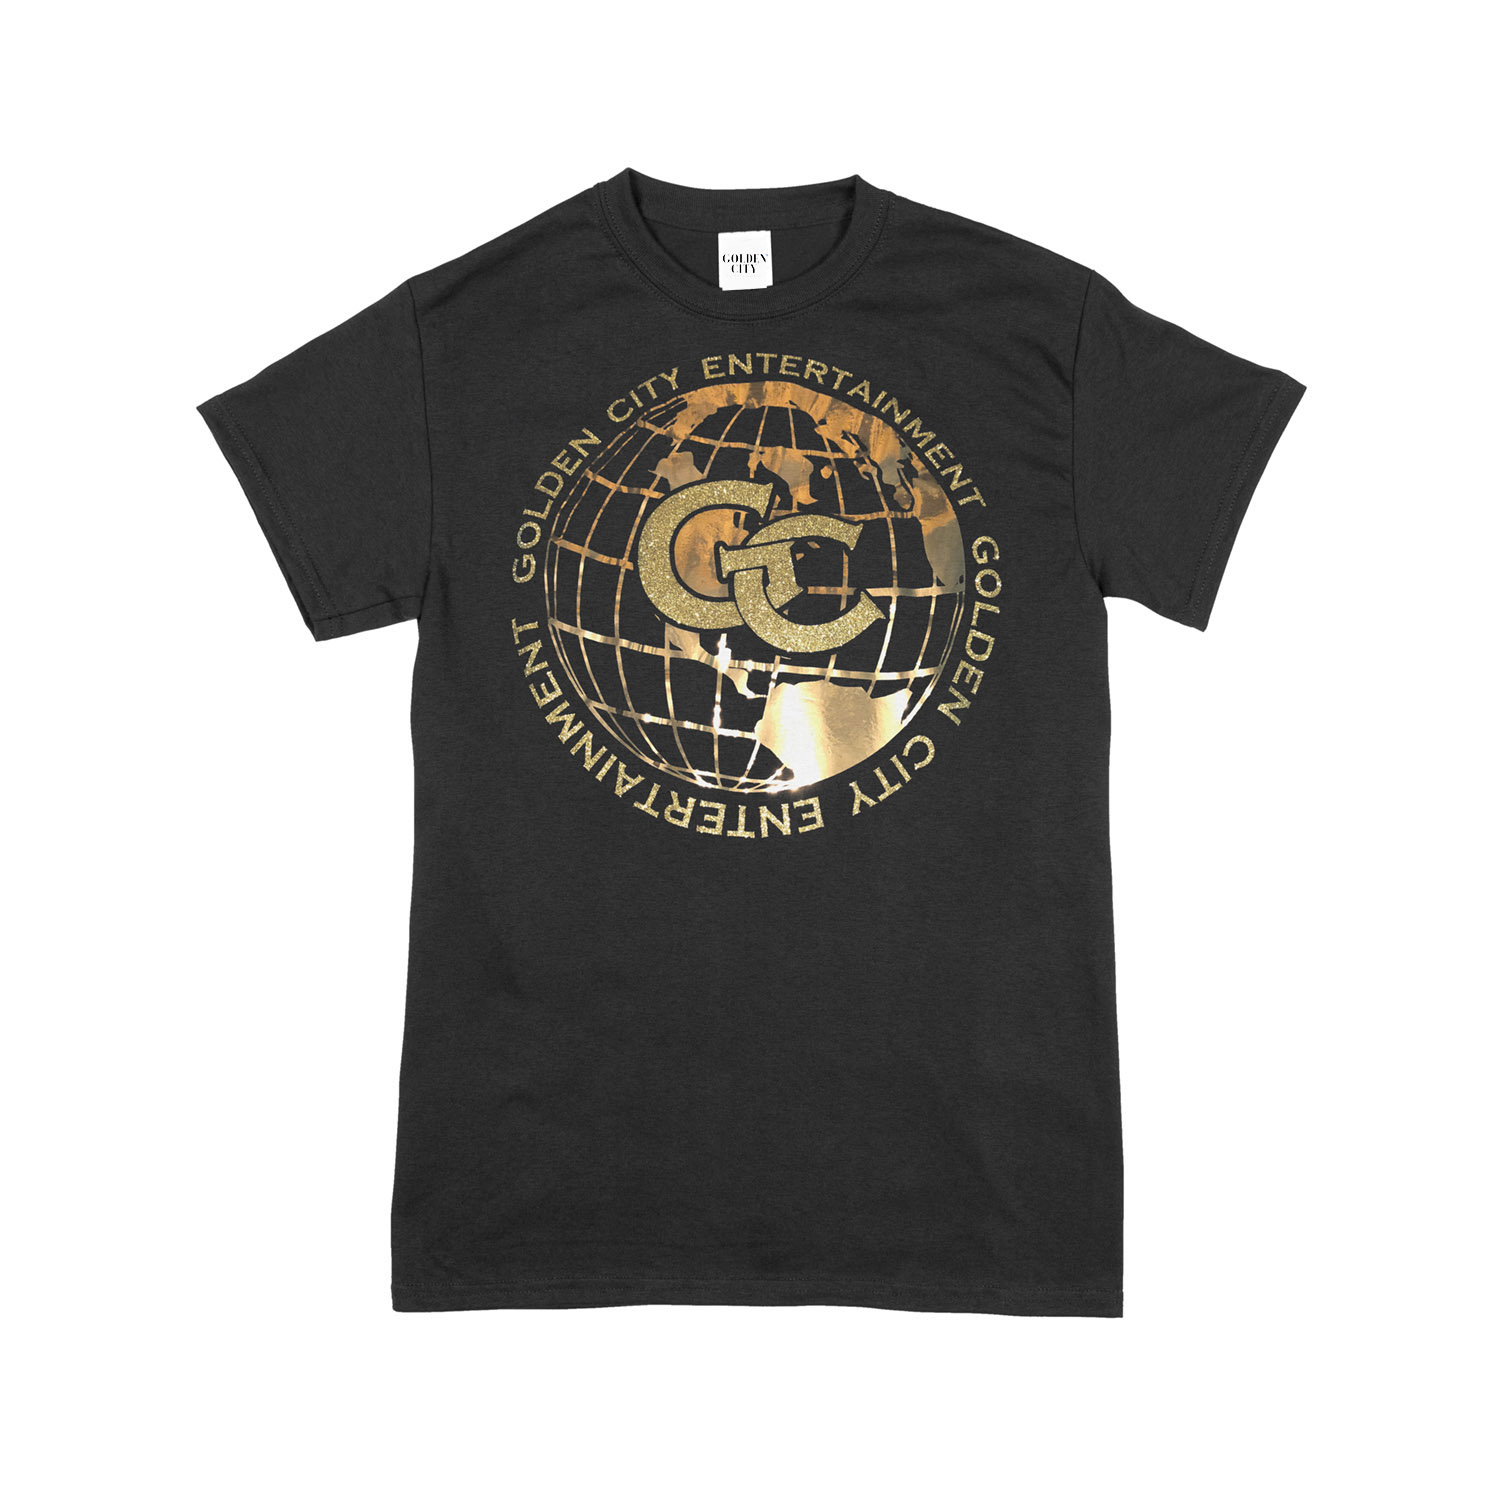 Golden city T-shirts wholesale price